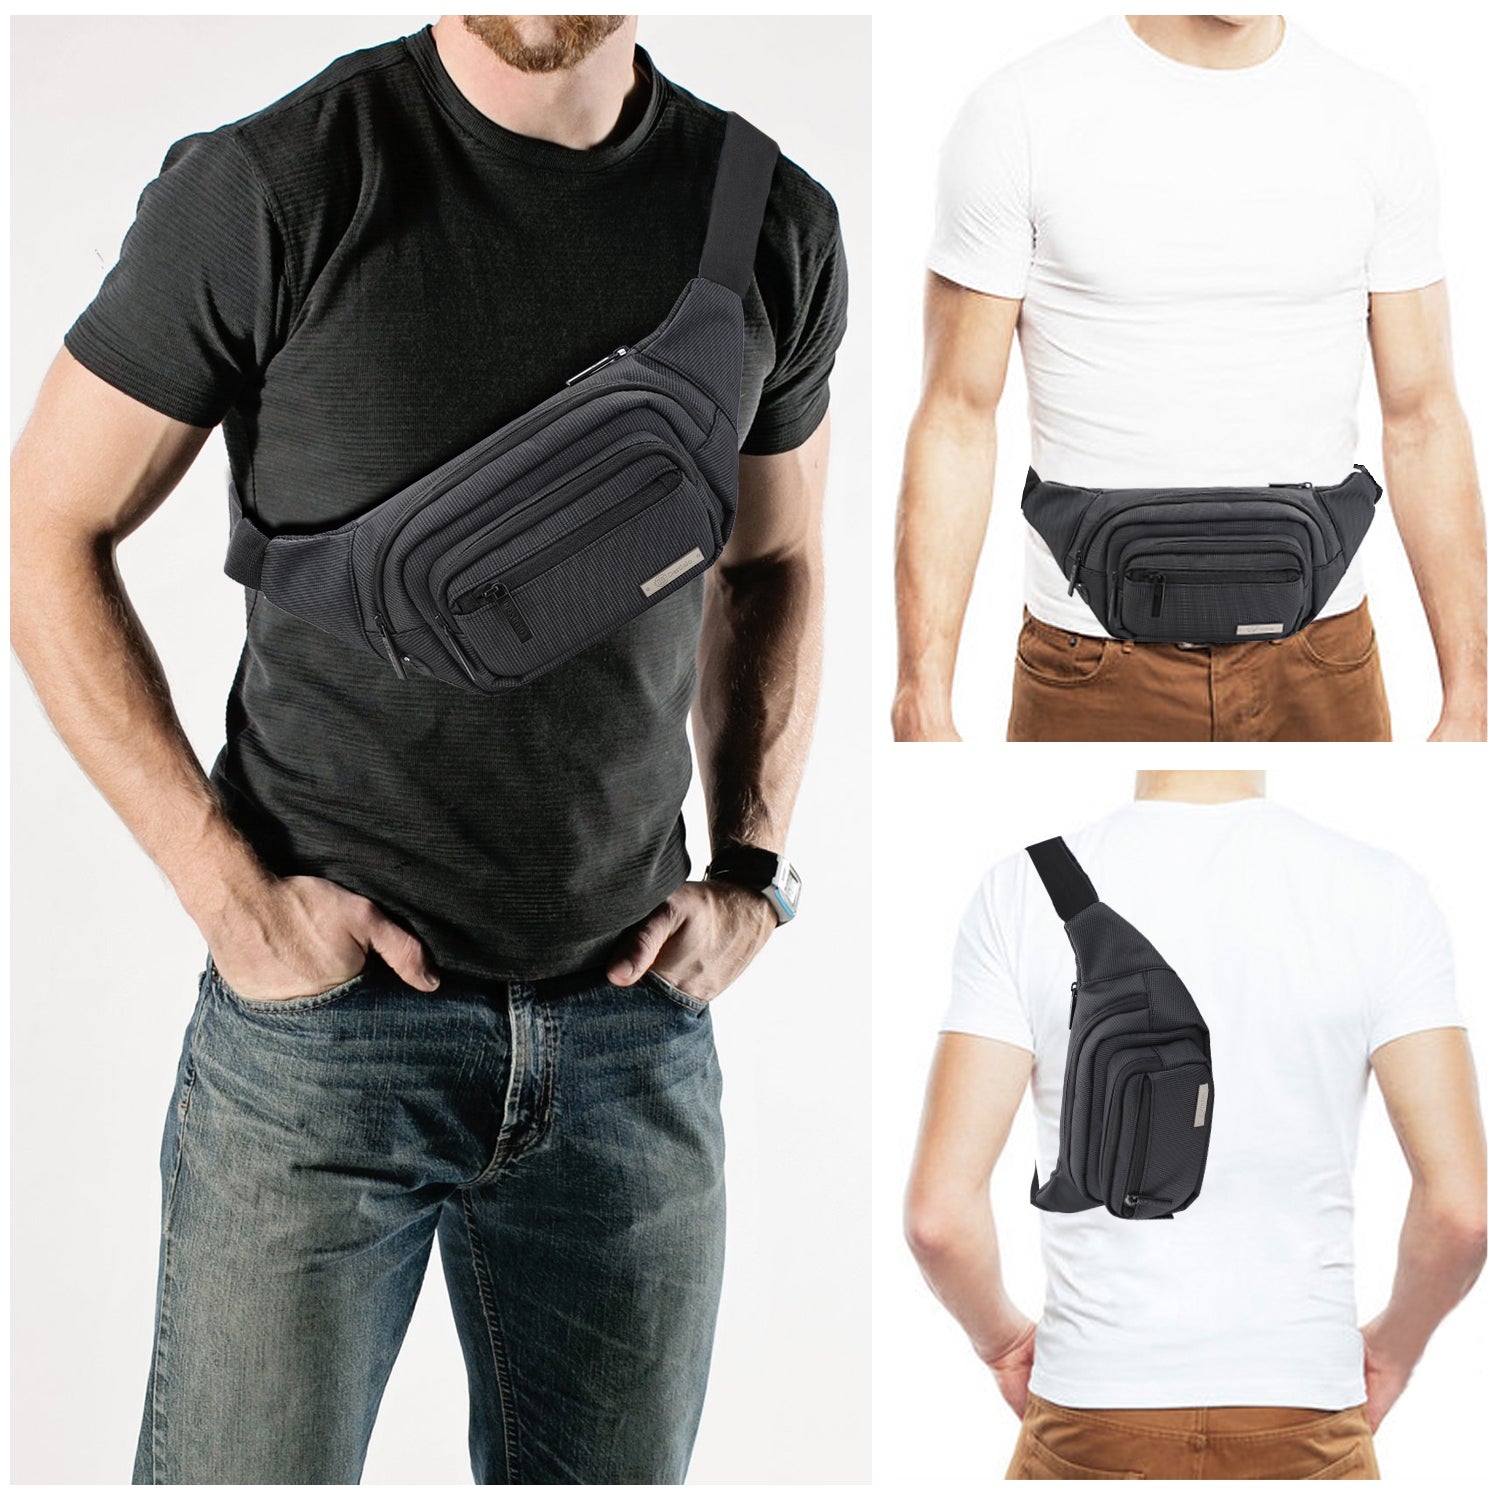 NEW] Lululemon Everywhere Belt Bag/Waist Bag/Fanny Pack 1L - BLACK | eBay